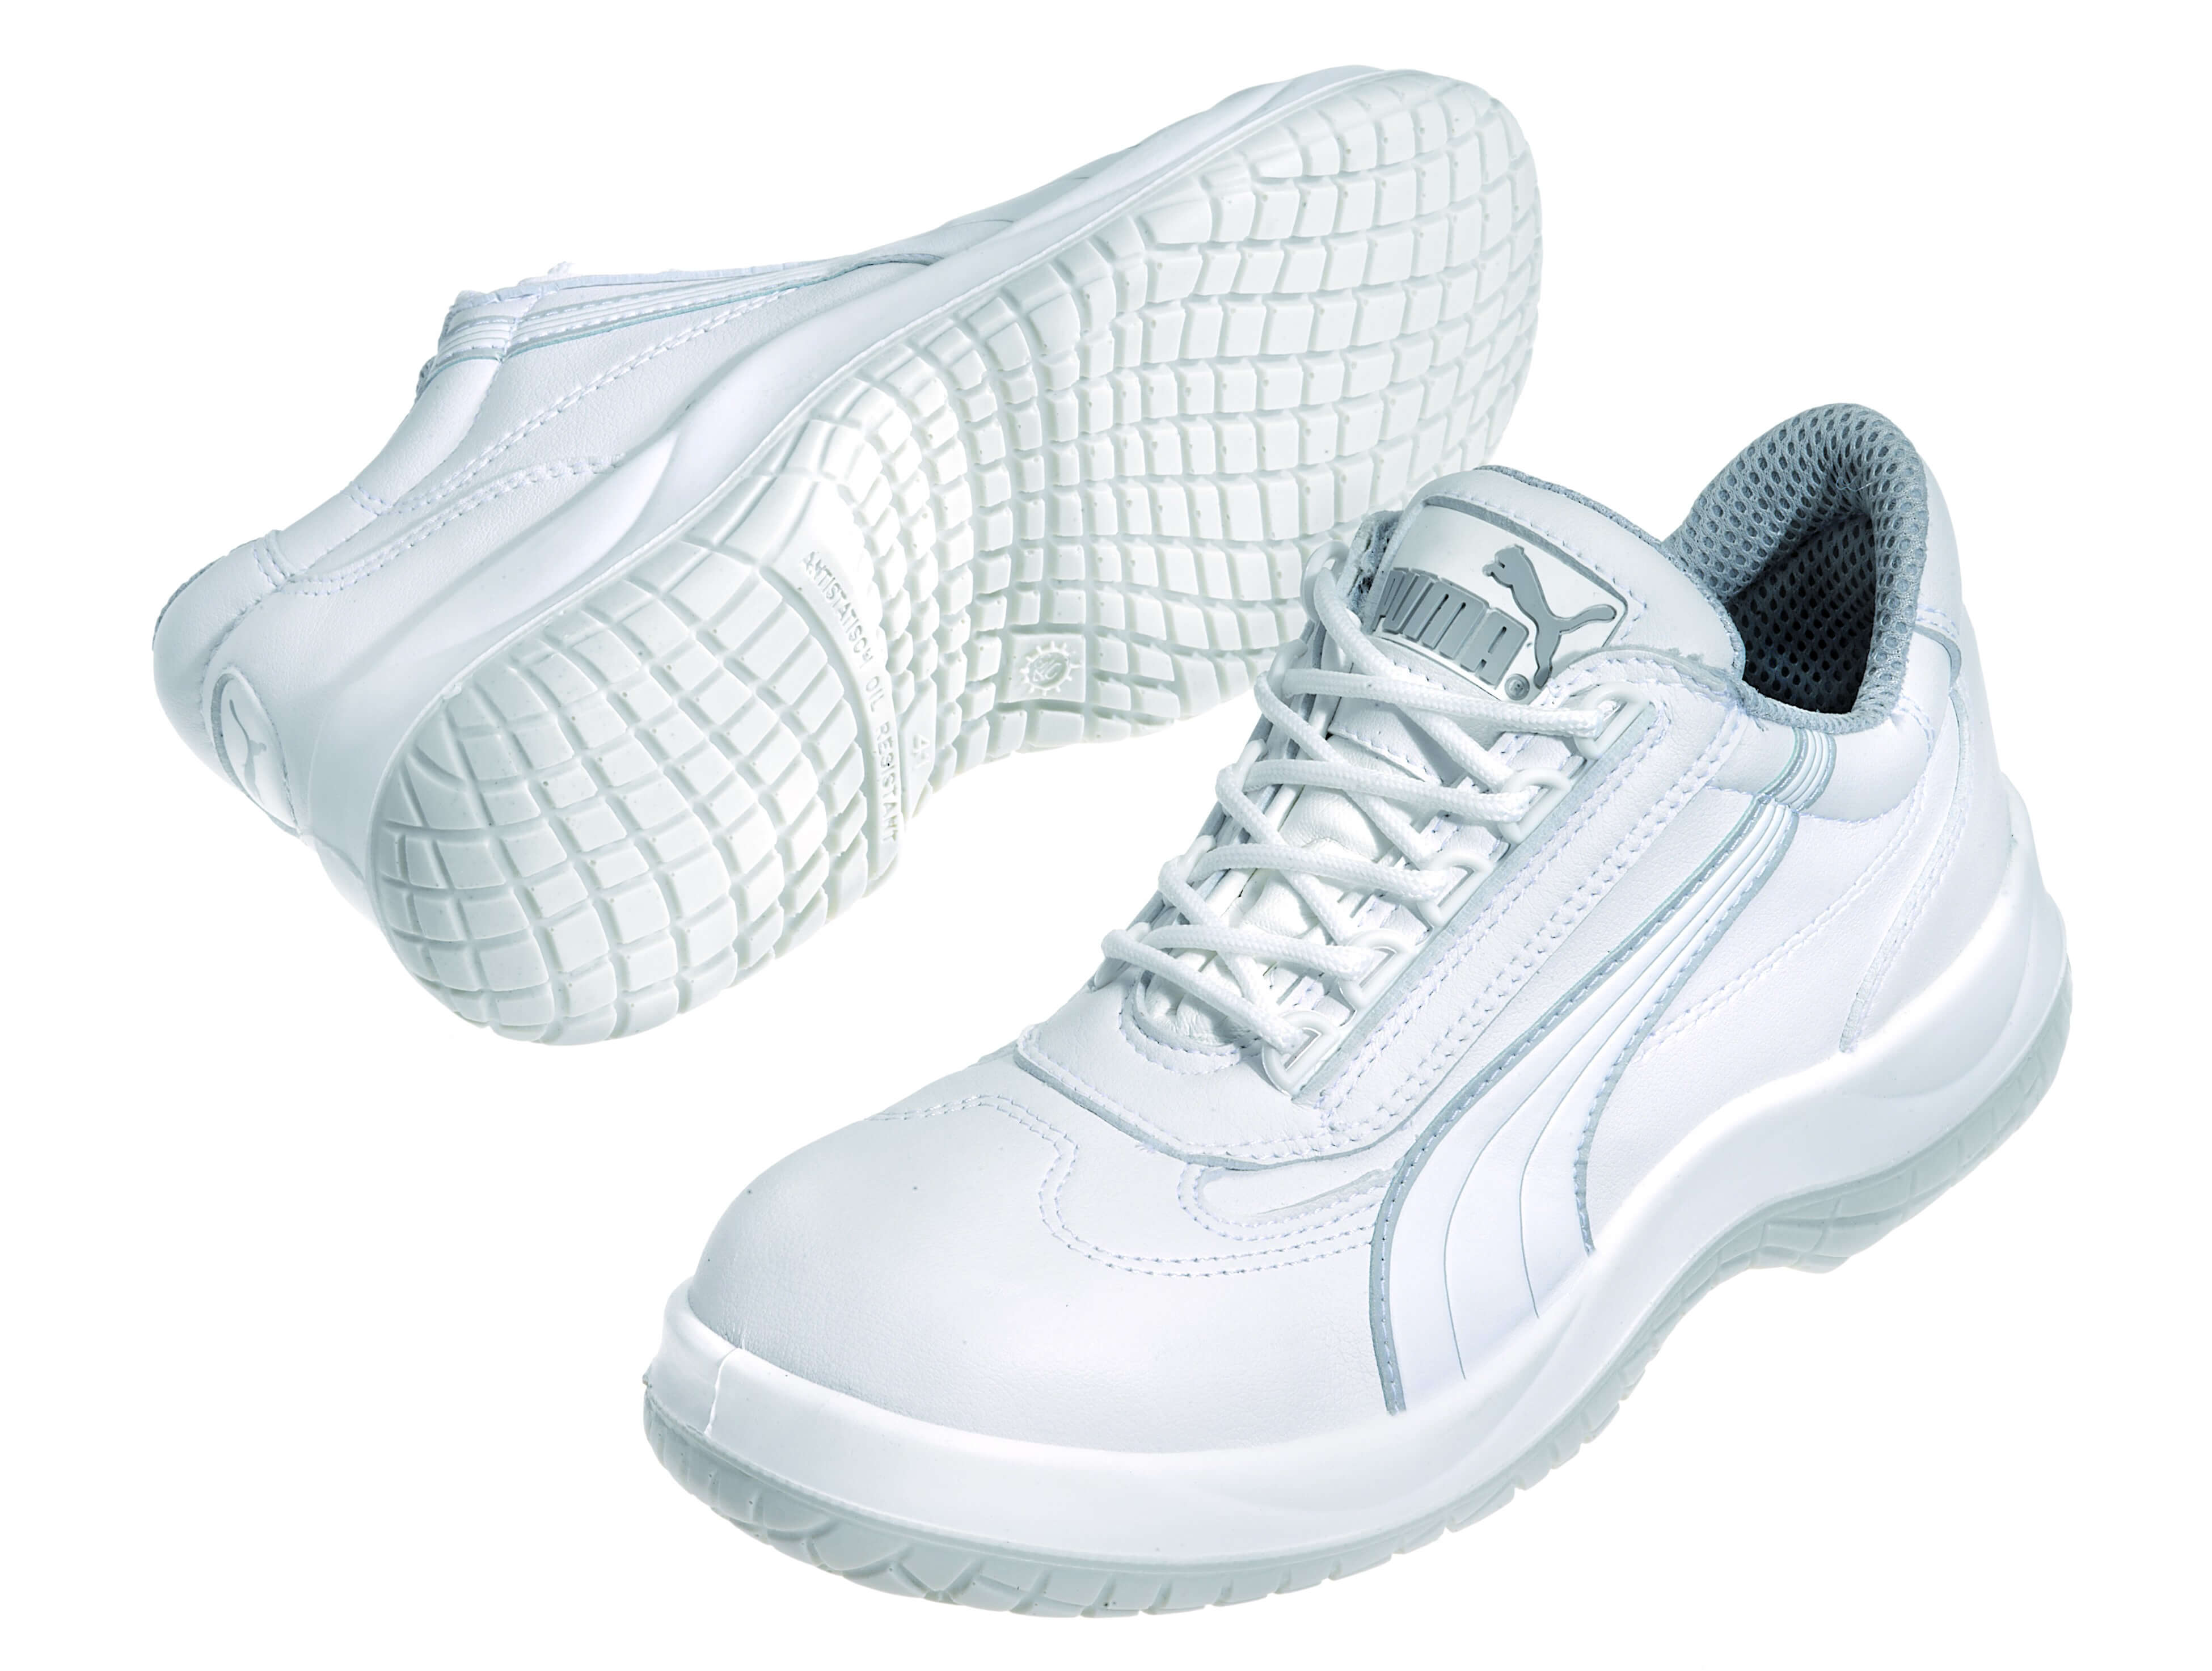 puma chaussure blanche